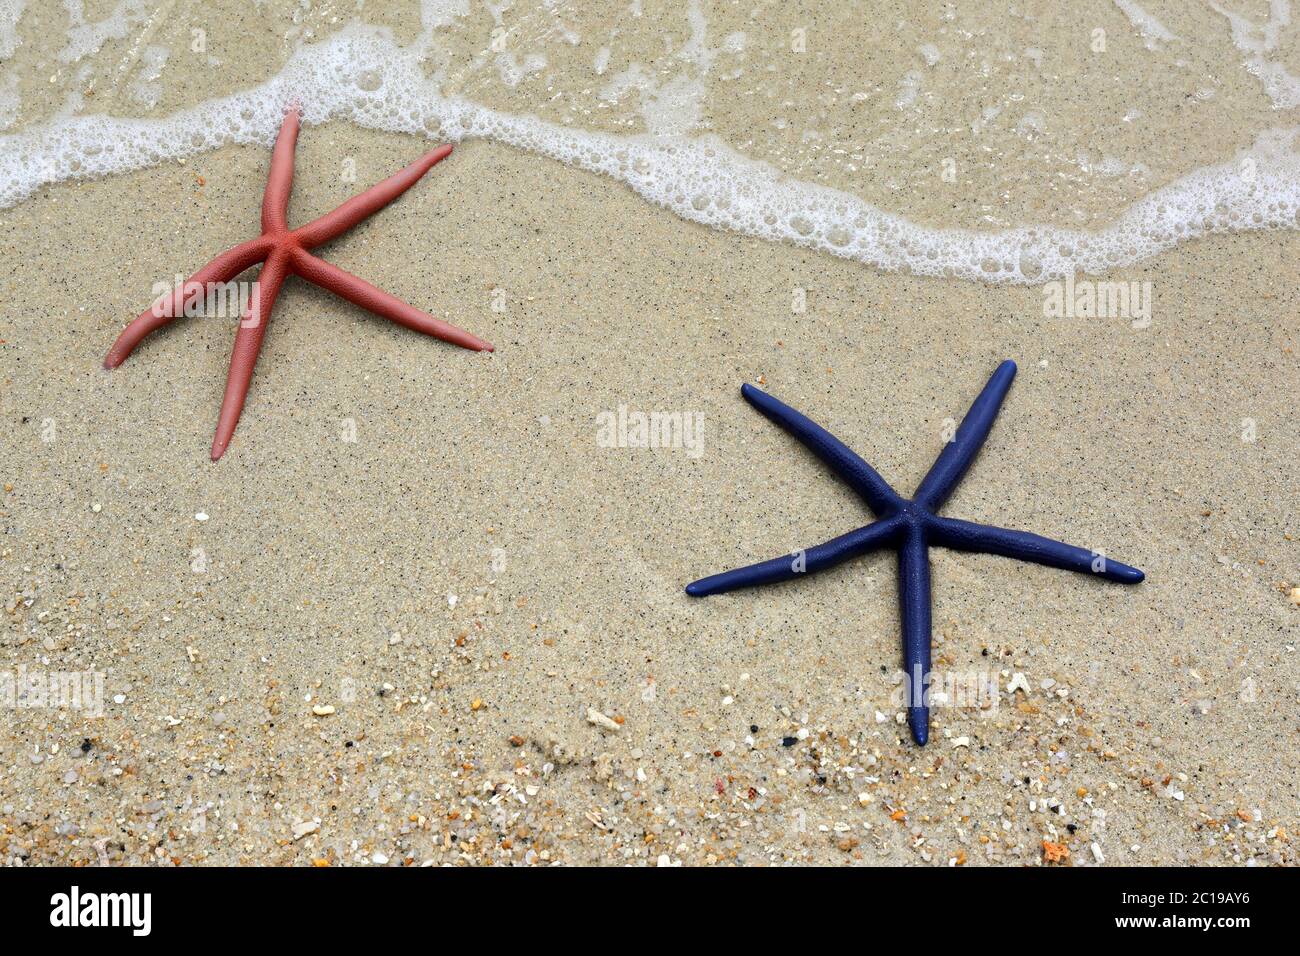 Two starfish lying on a sandy beach Stock Photo